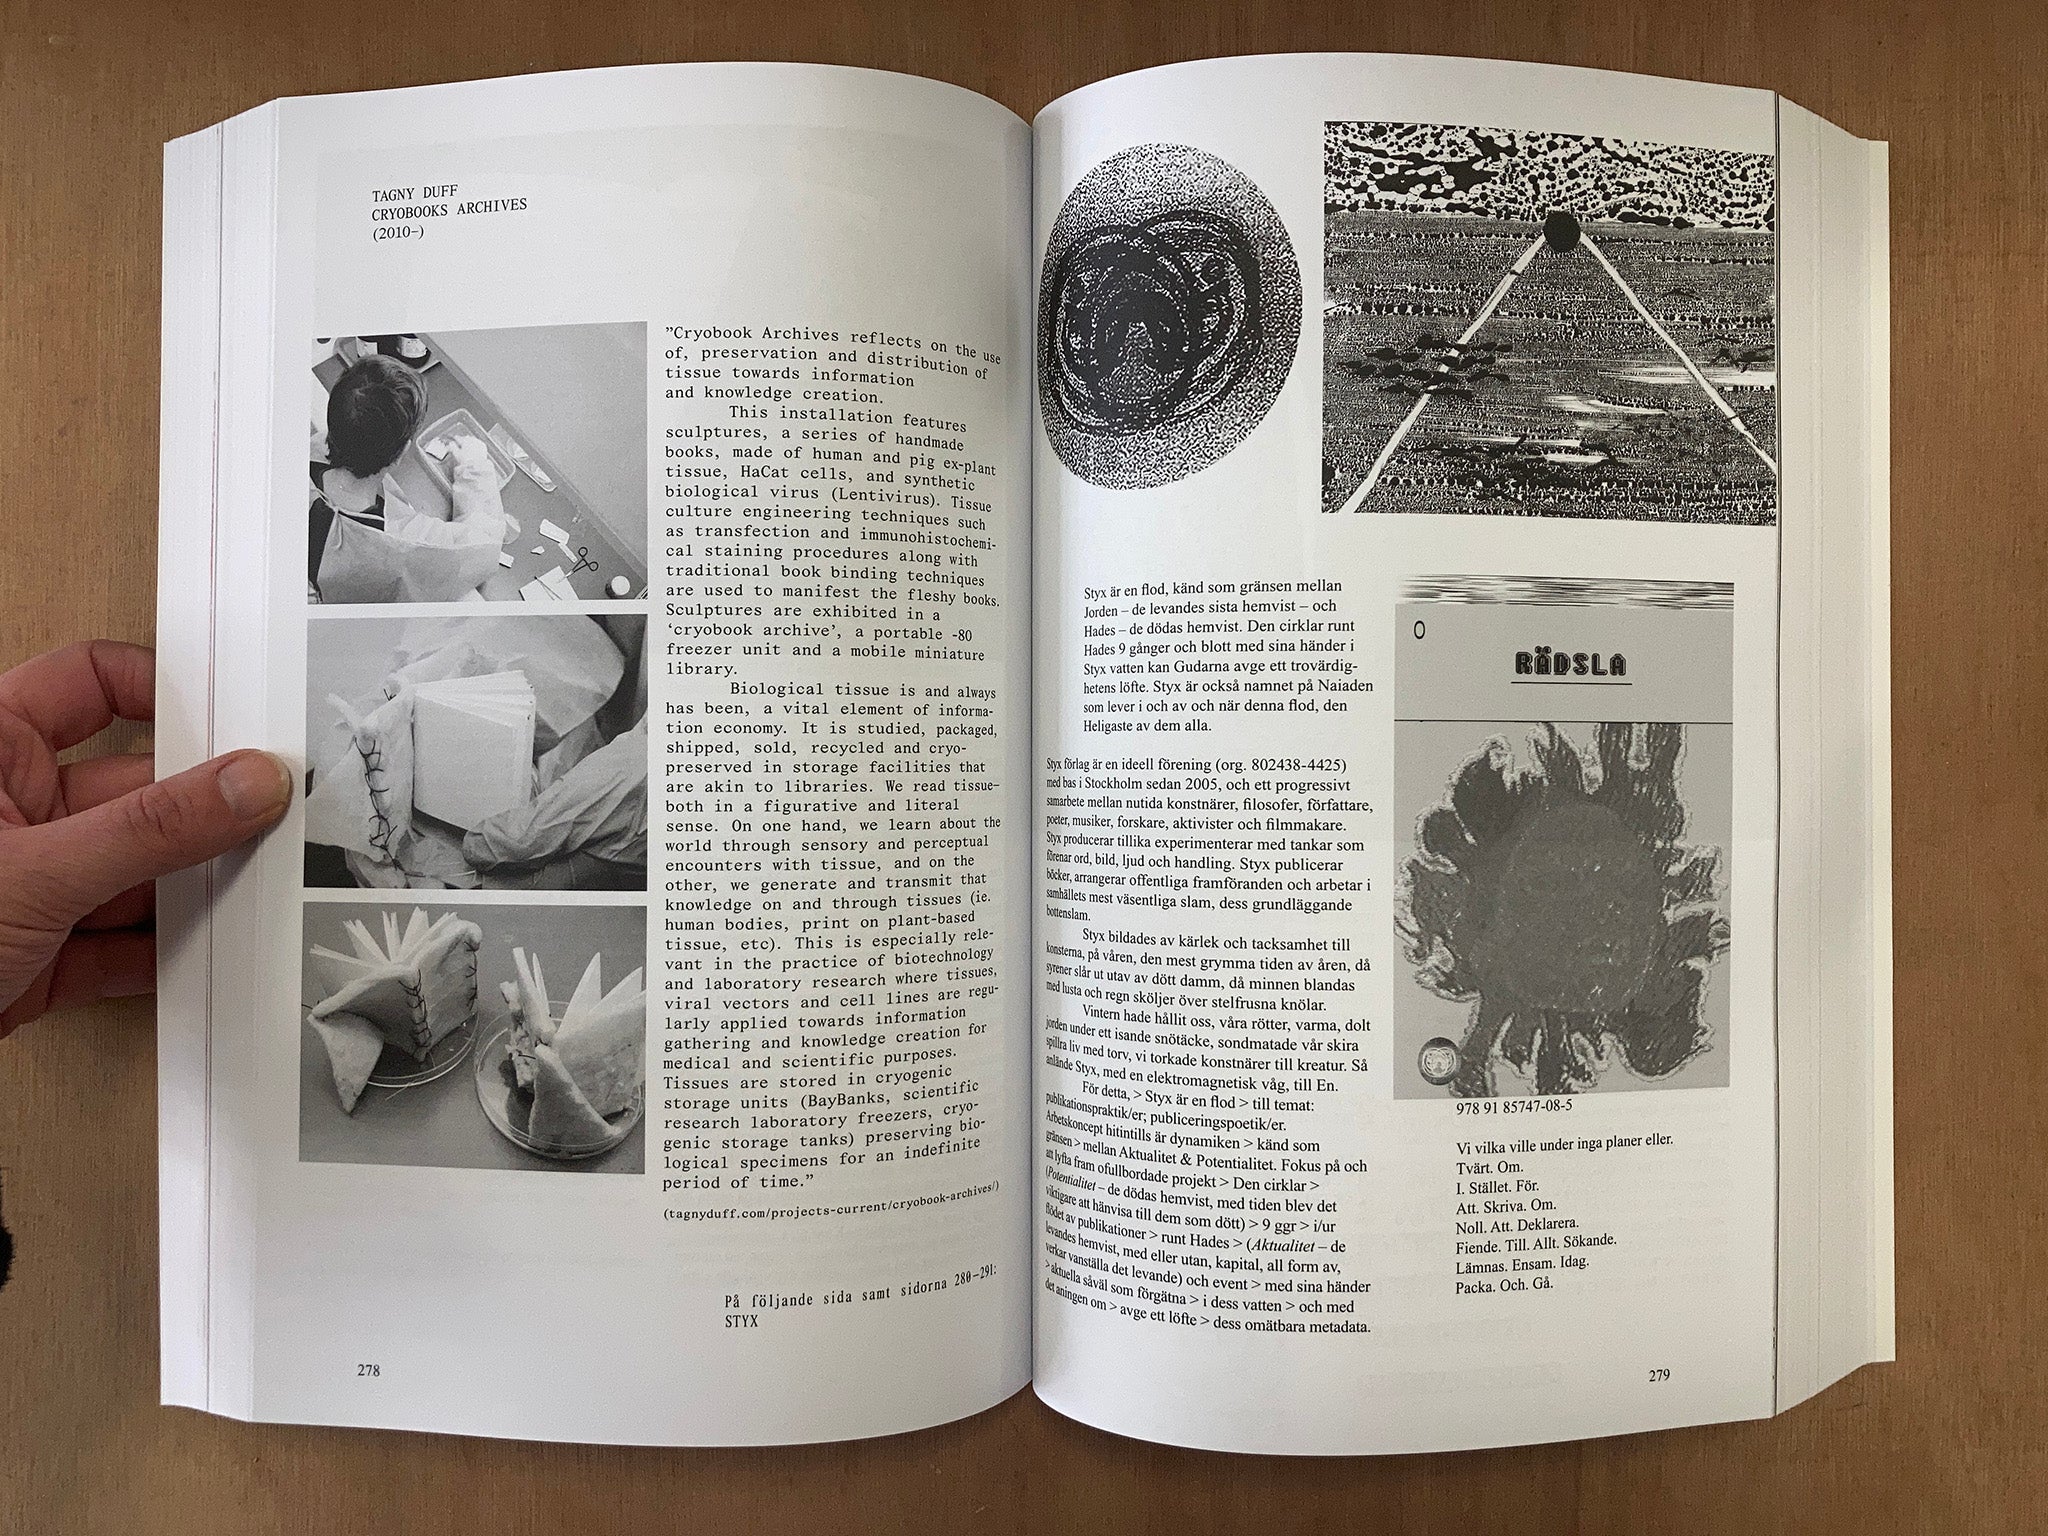 OEI #86/87 PUBLISHING PRACTICES, PUBLISHING POETICS edited by Jonas (J) Magnusson and Cecilia Grönberg